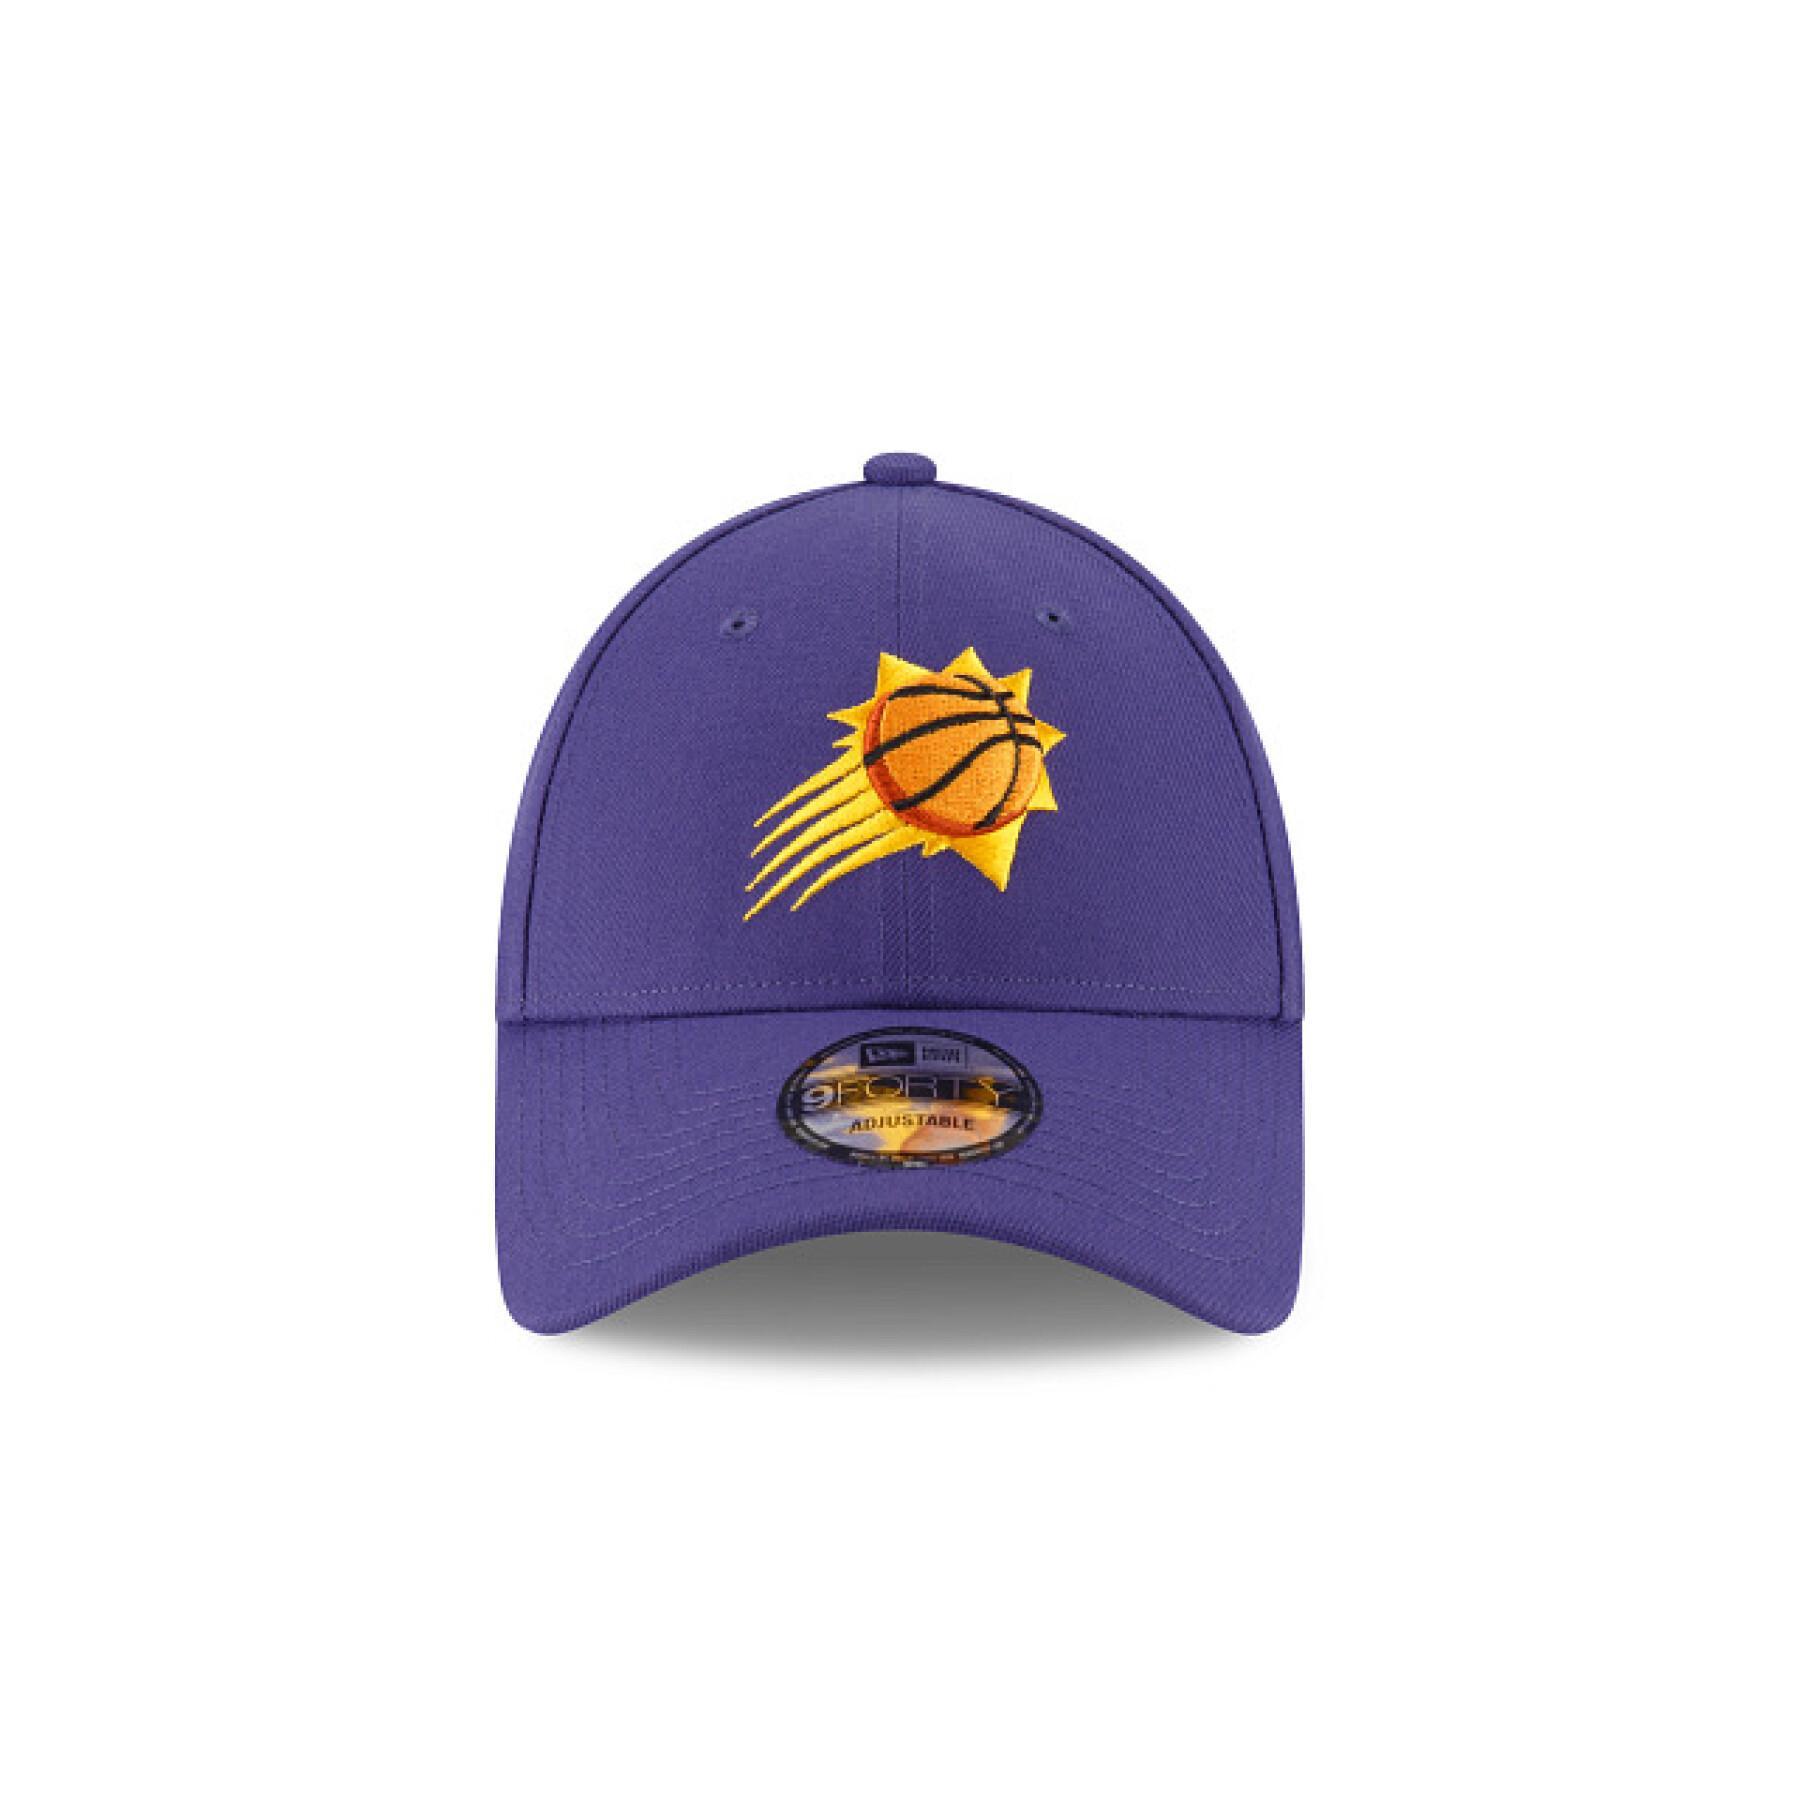 Kappe Phoenix Suns NBA The League